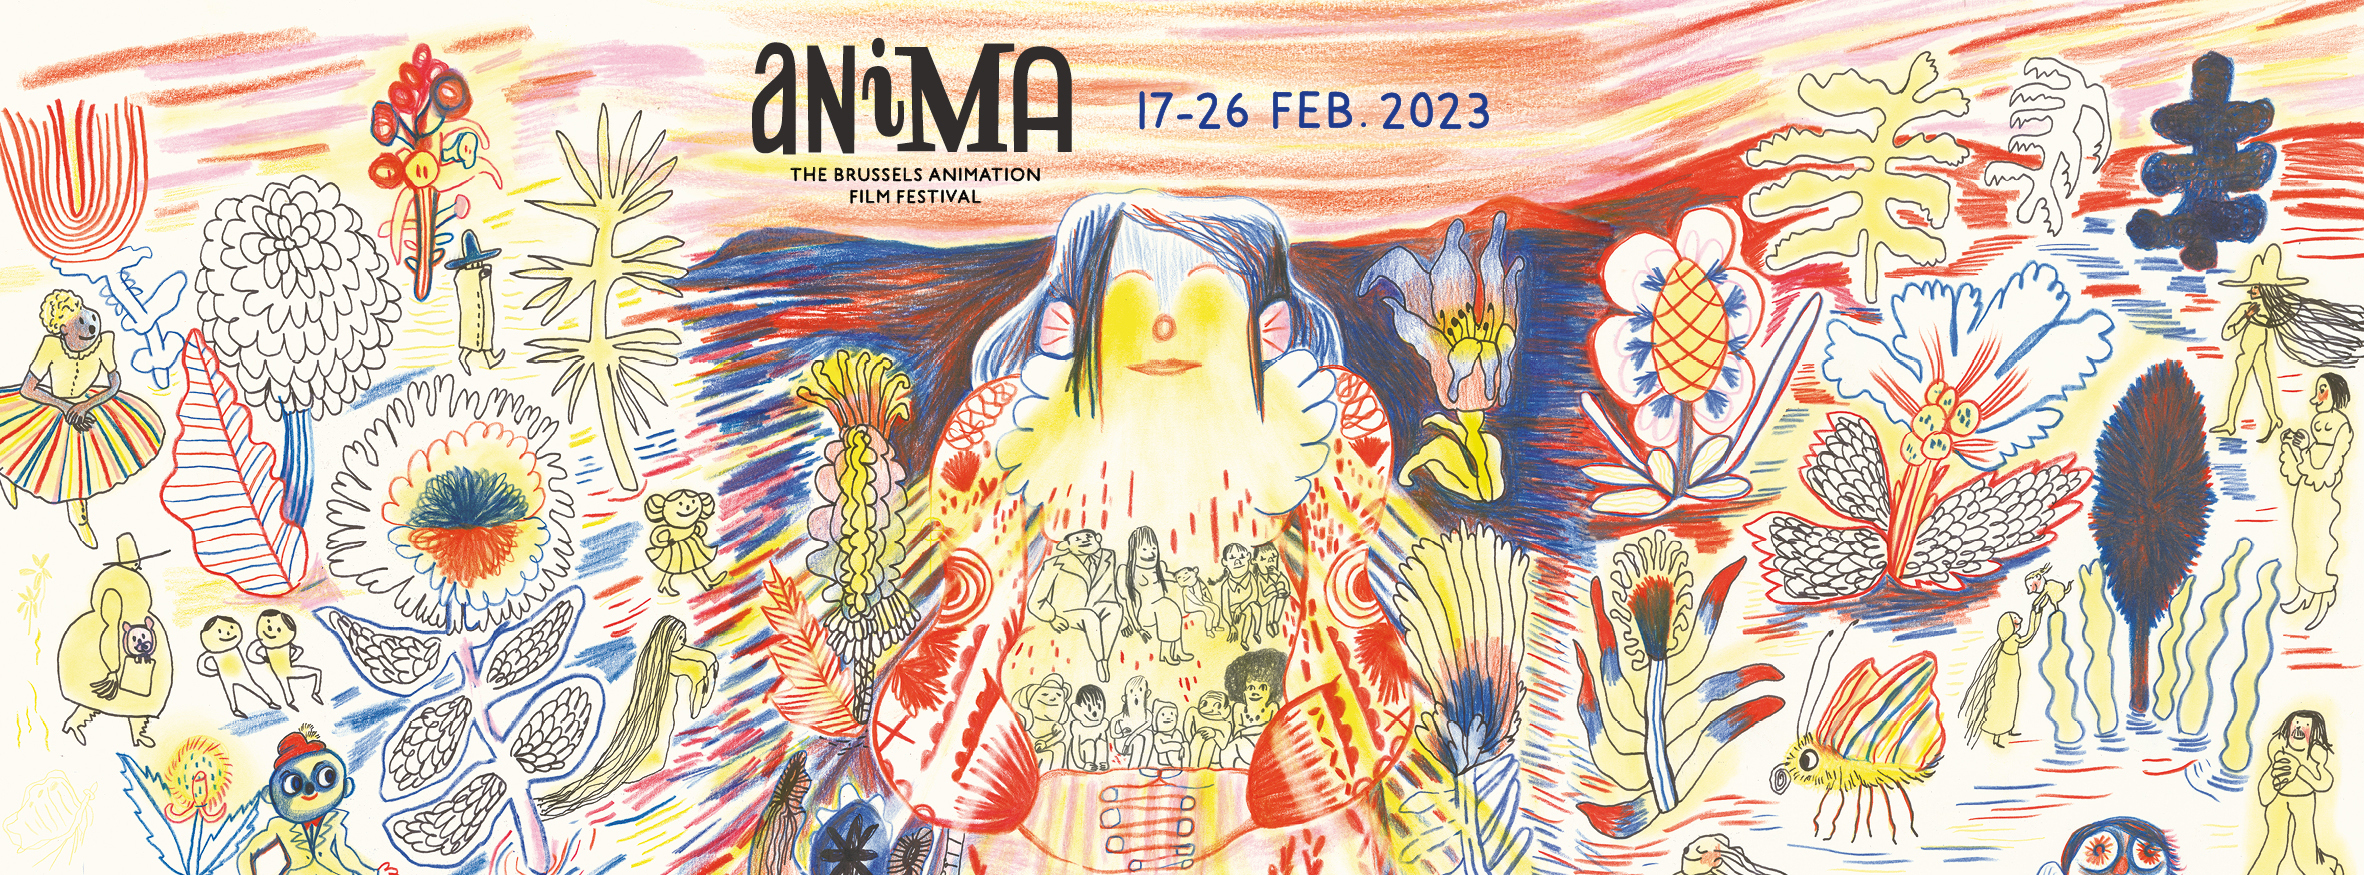 Anima 2023 Awards